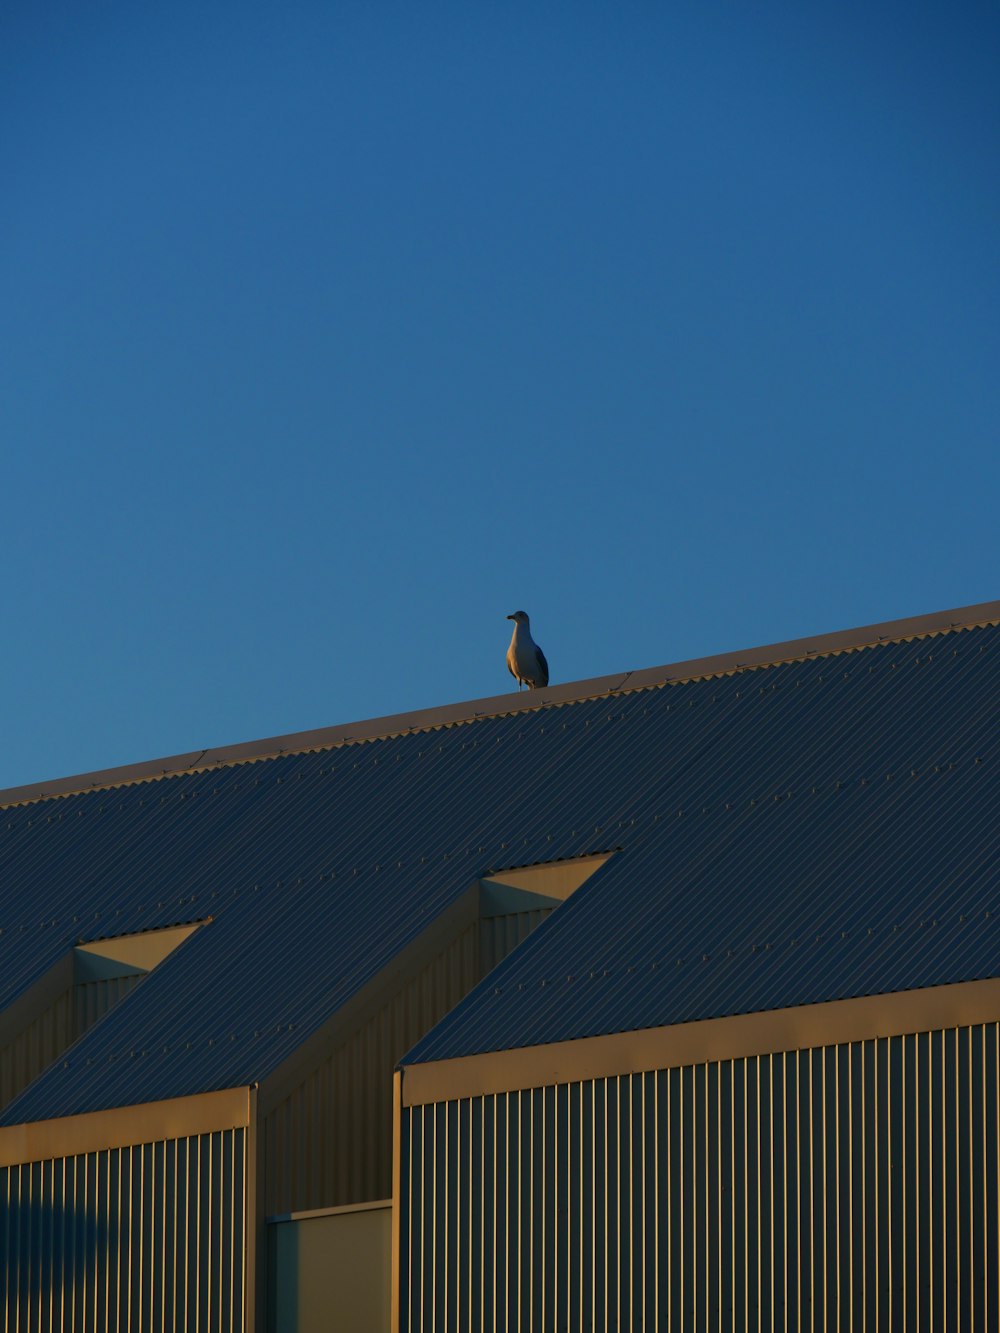 black bird on top of brown building